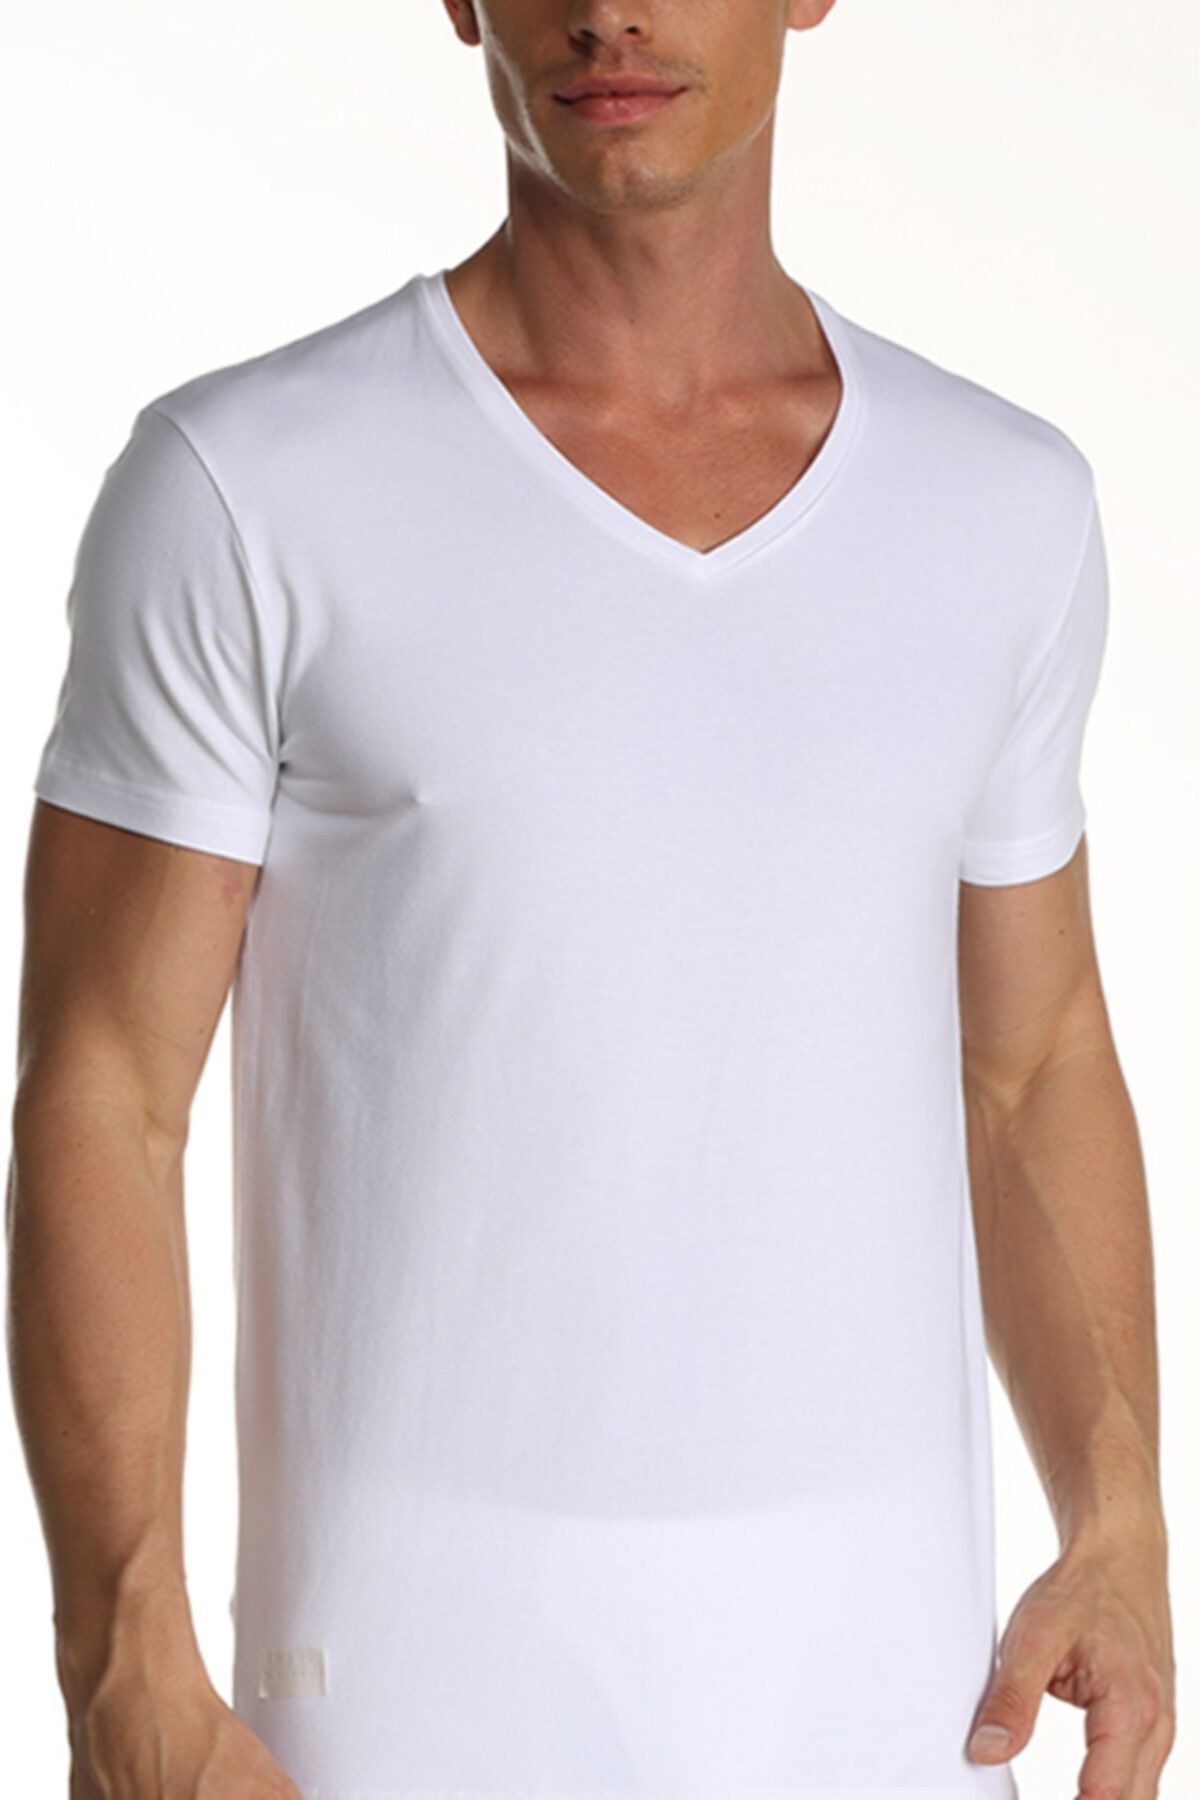 Çift Kaplan Erkek Elastanlı V Yaka Beyaz T-shirt 0956